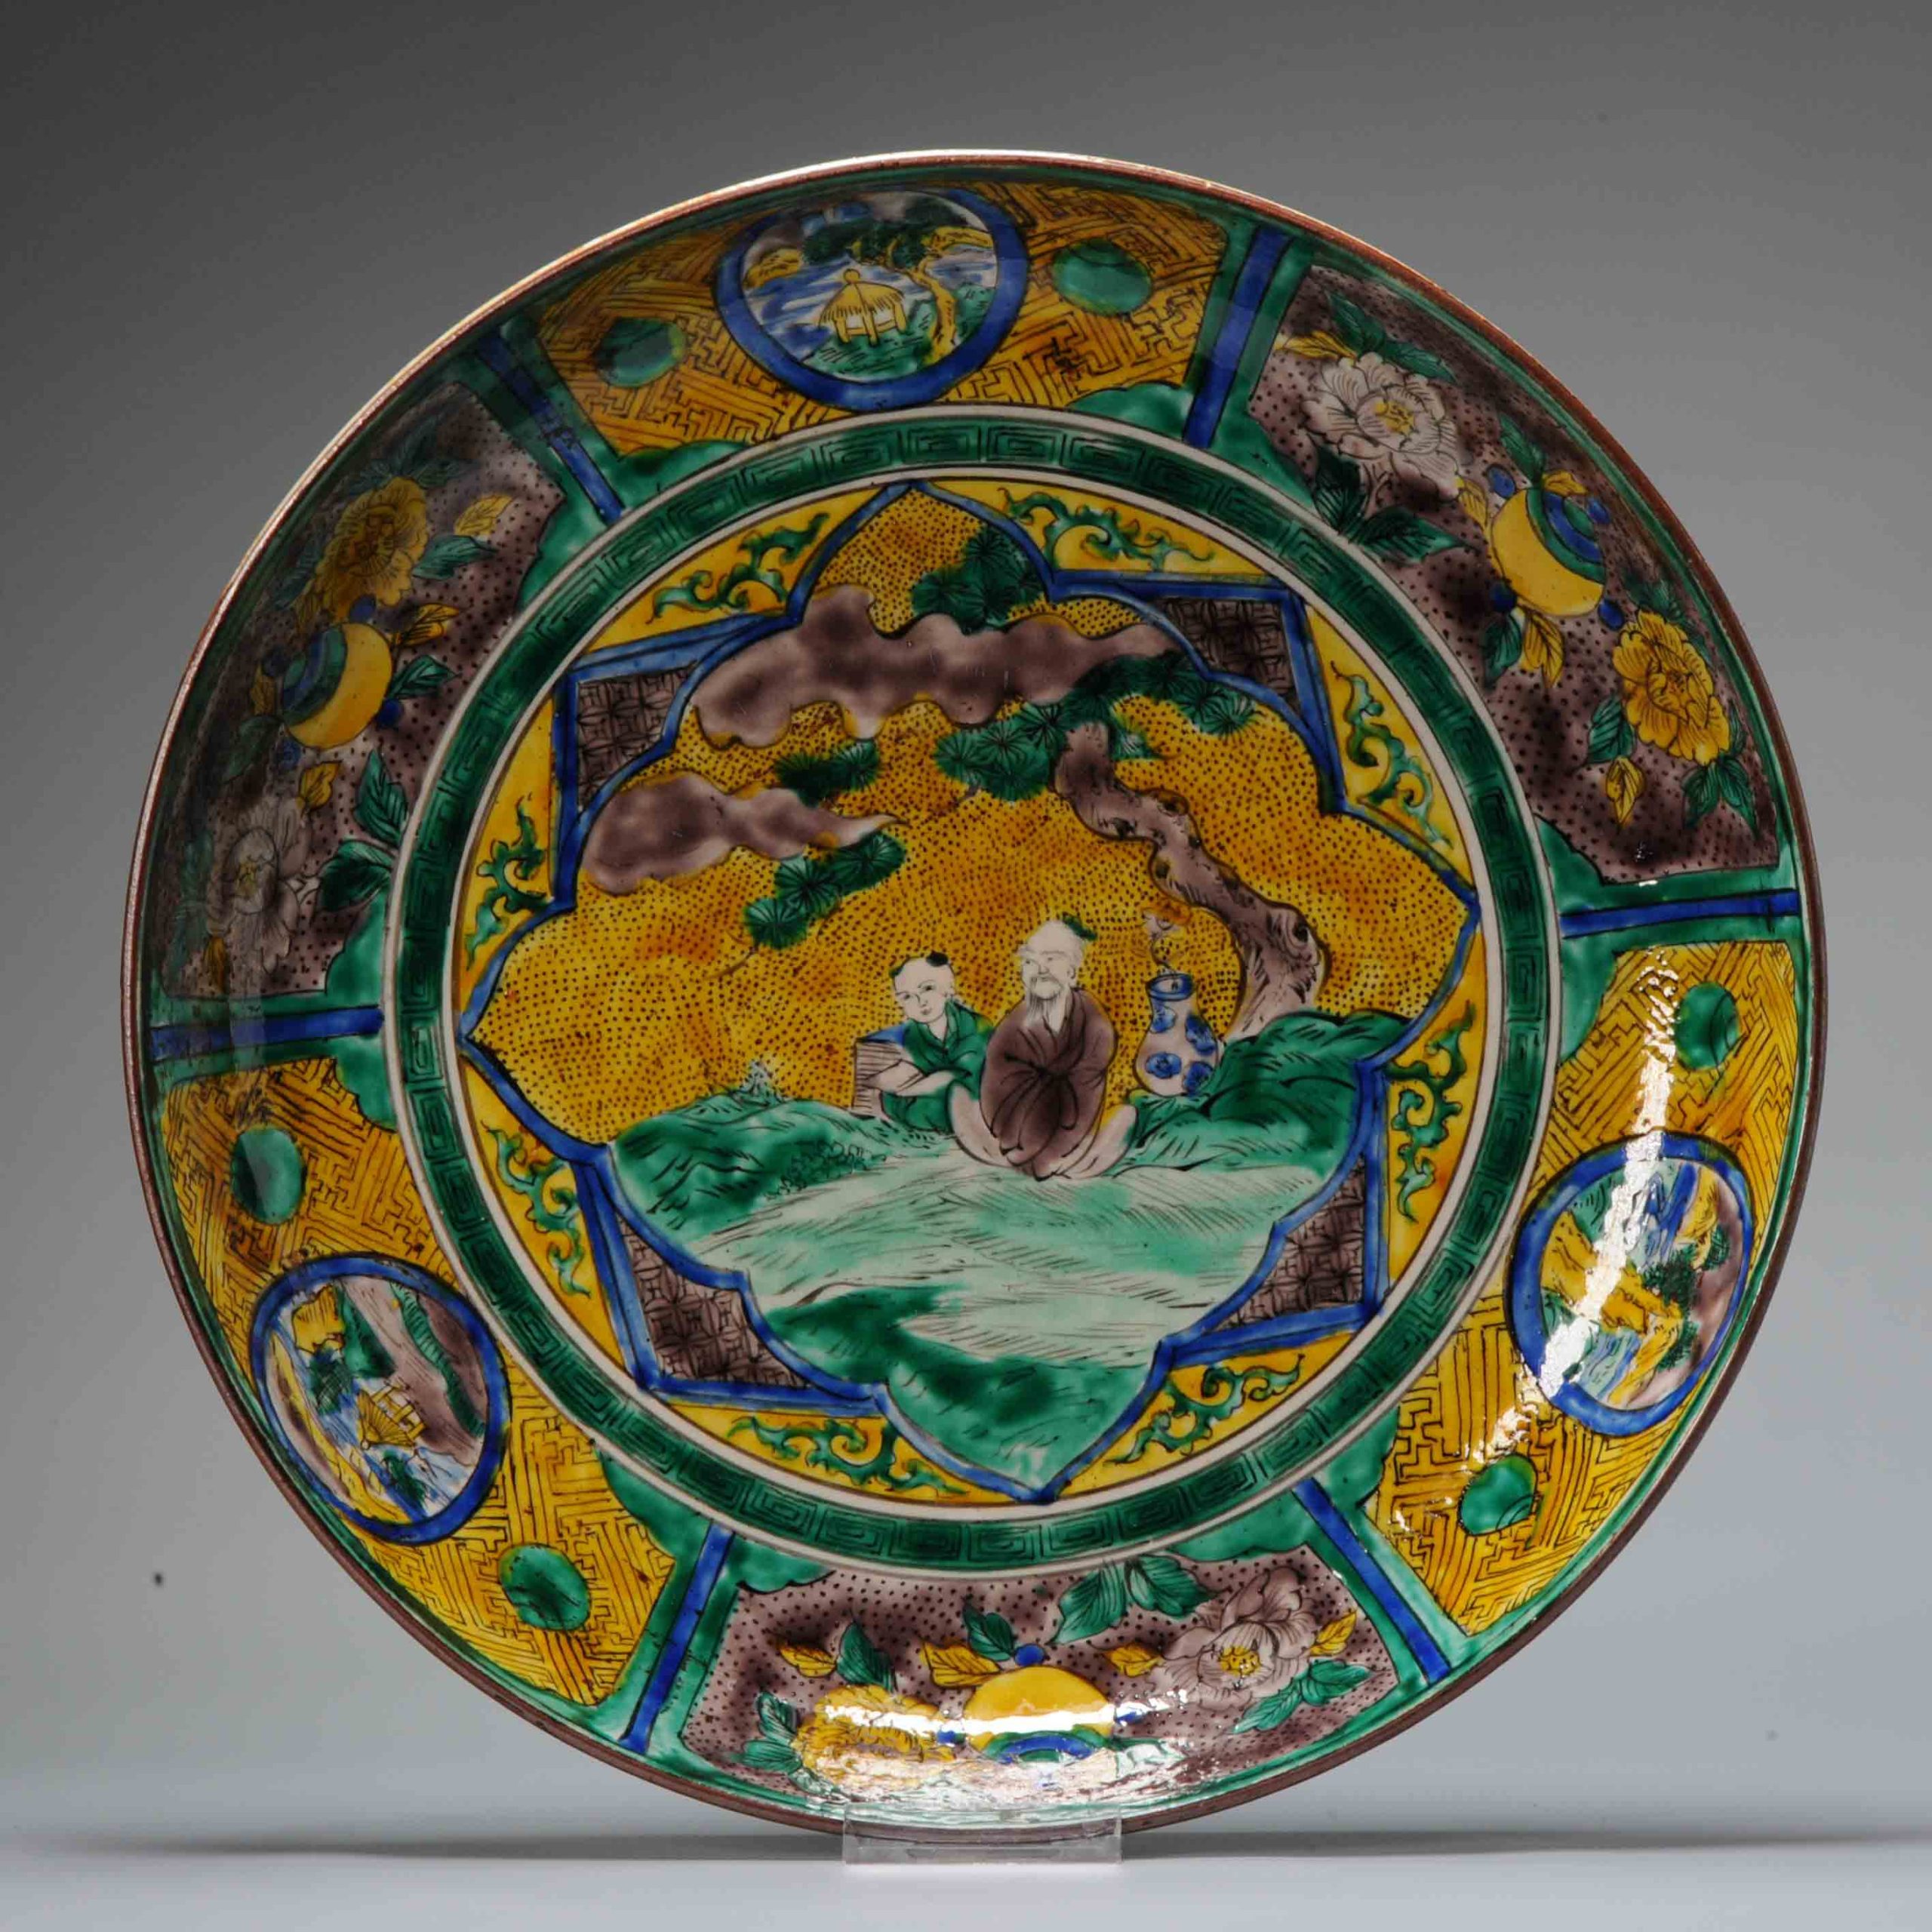 Antique 19th Century Japanese Porcelain Yoshidaya Kutani Large dish Japan